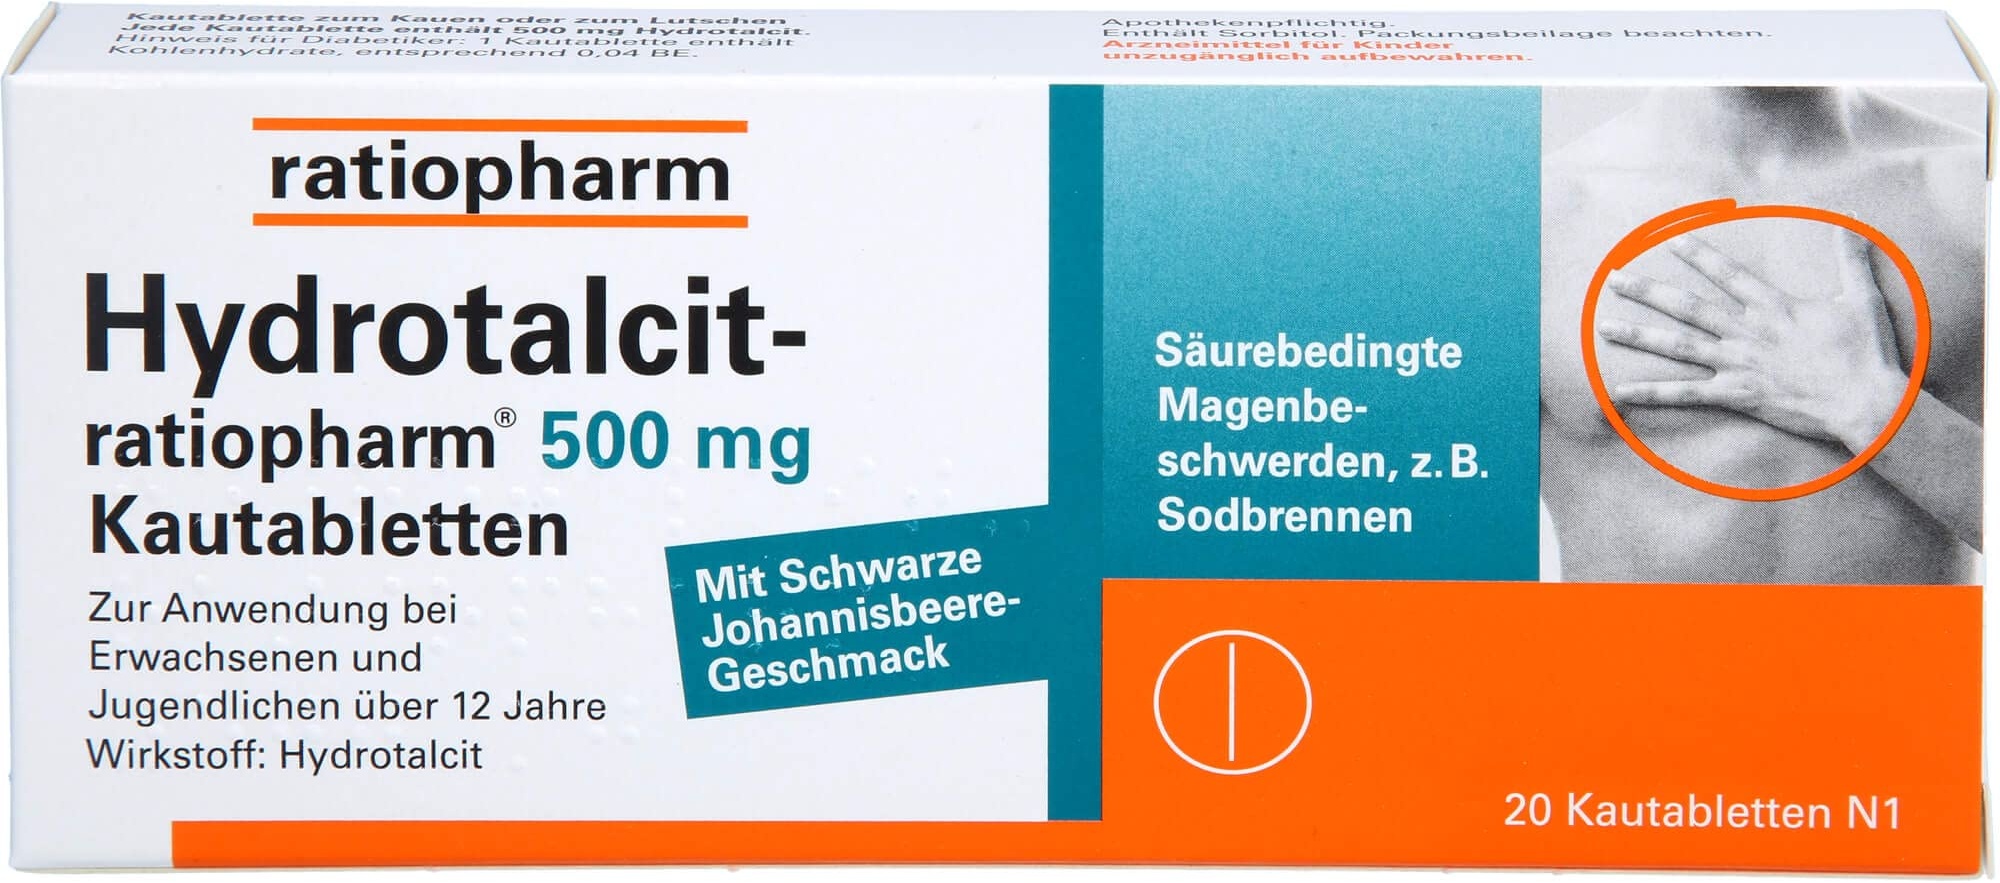 hydrotalcit-ratiopharm 500 mg kautabletten